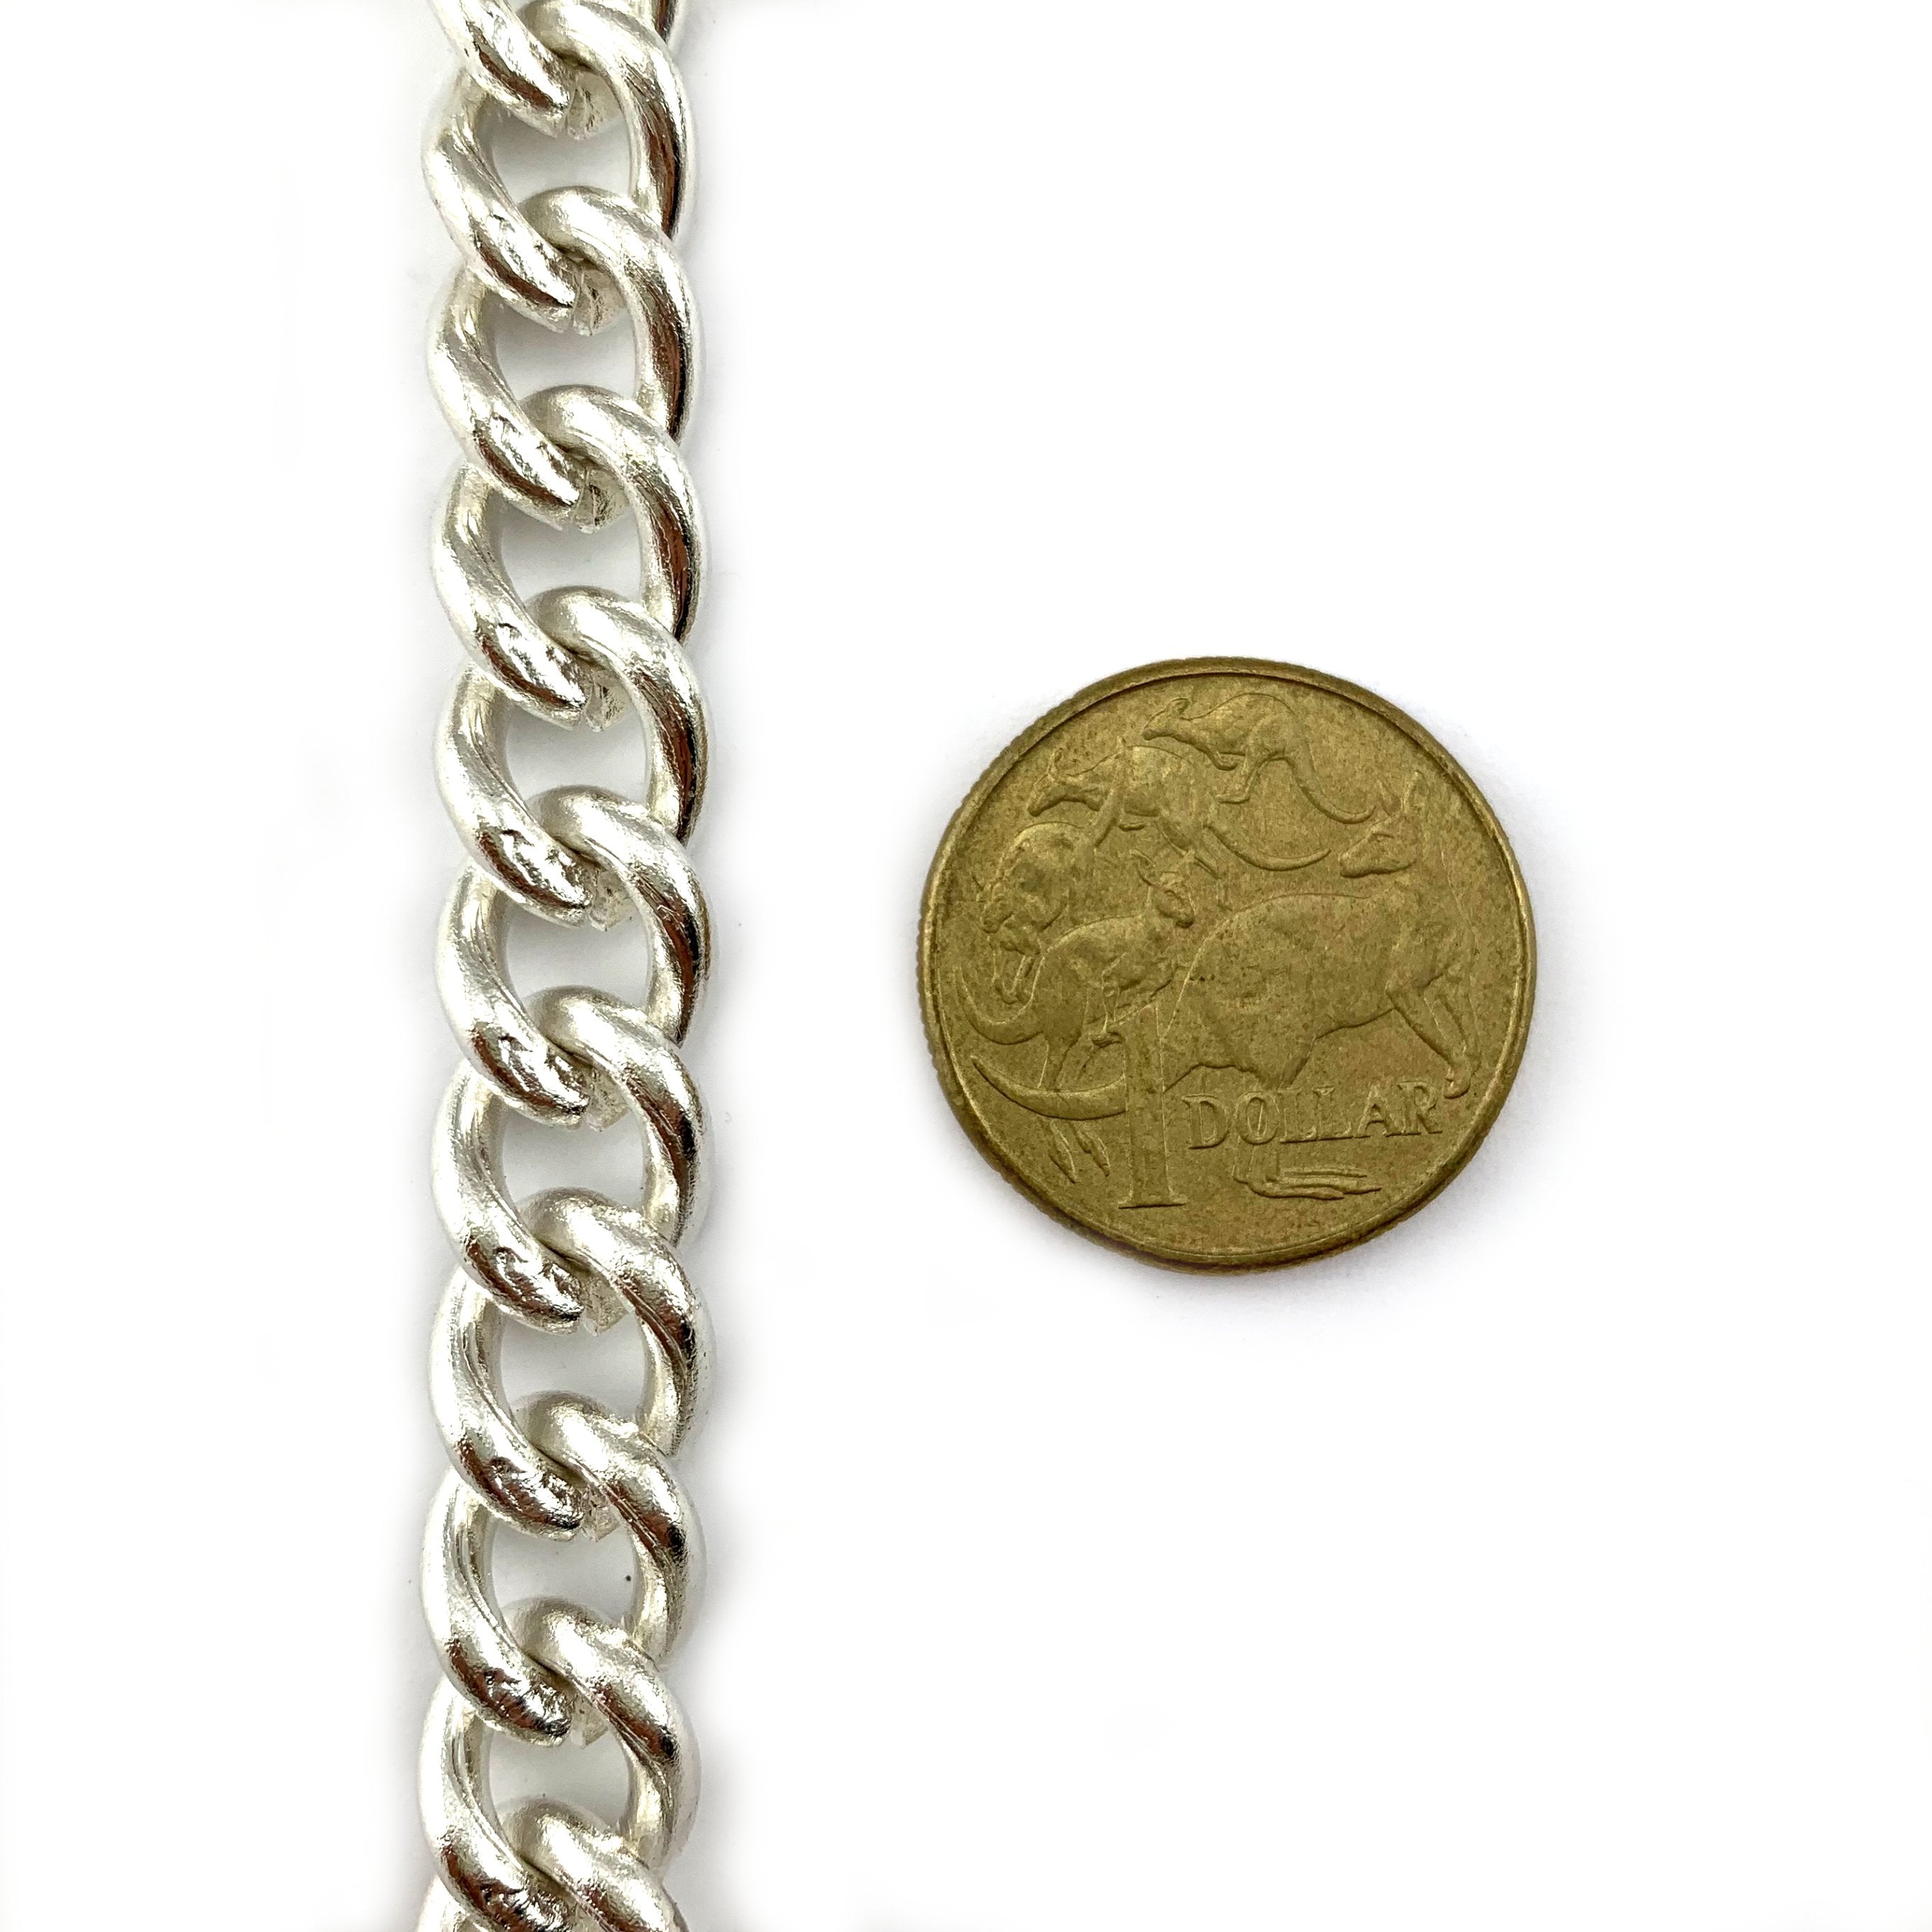 Curb Jewellery Chain - Silver Plated - C300 x 25m. Australia